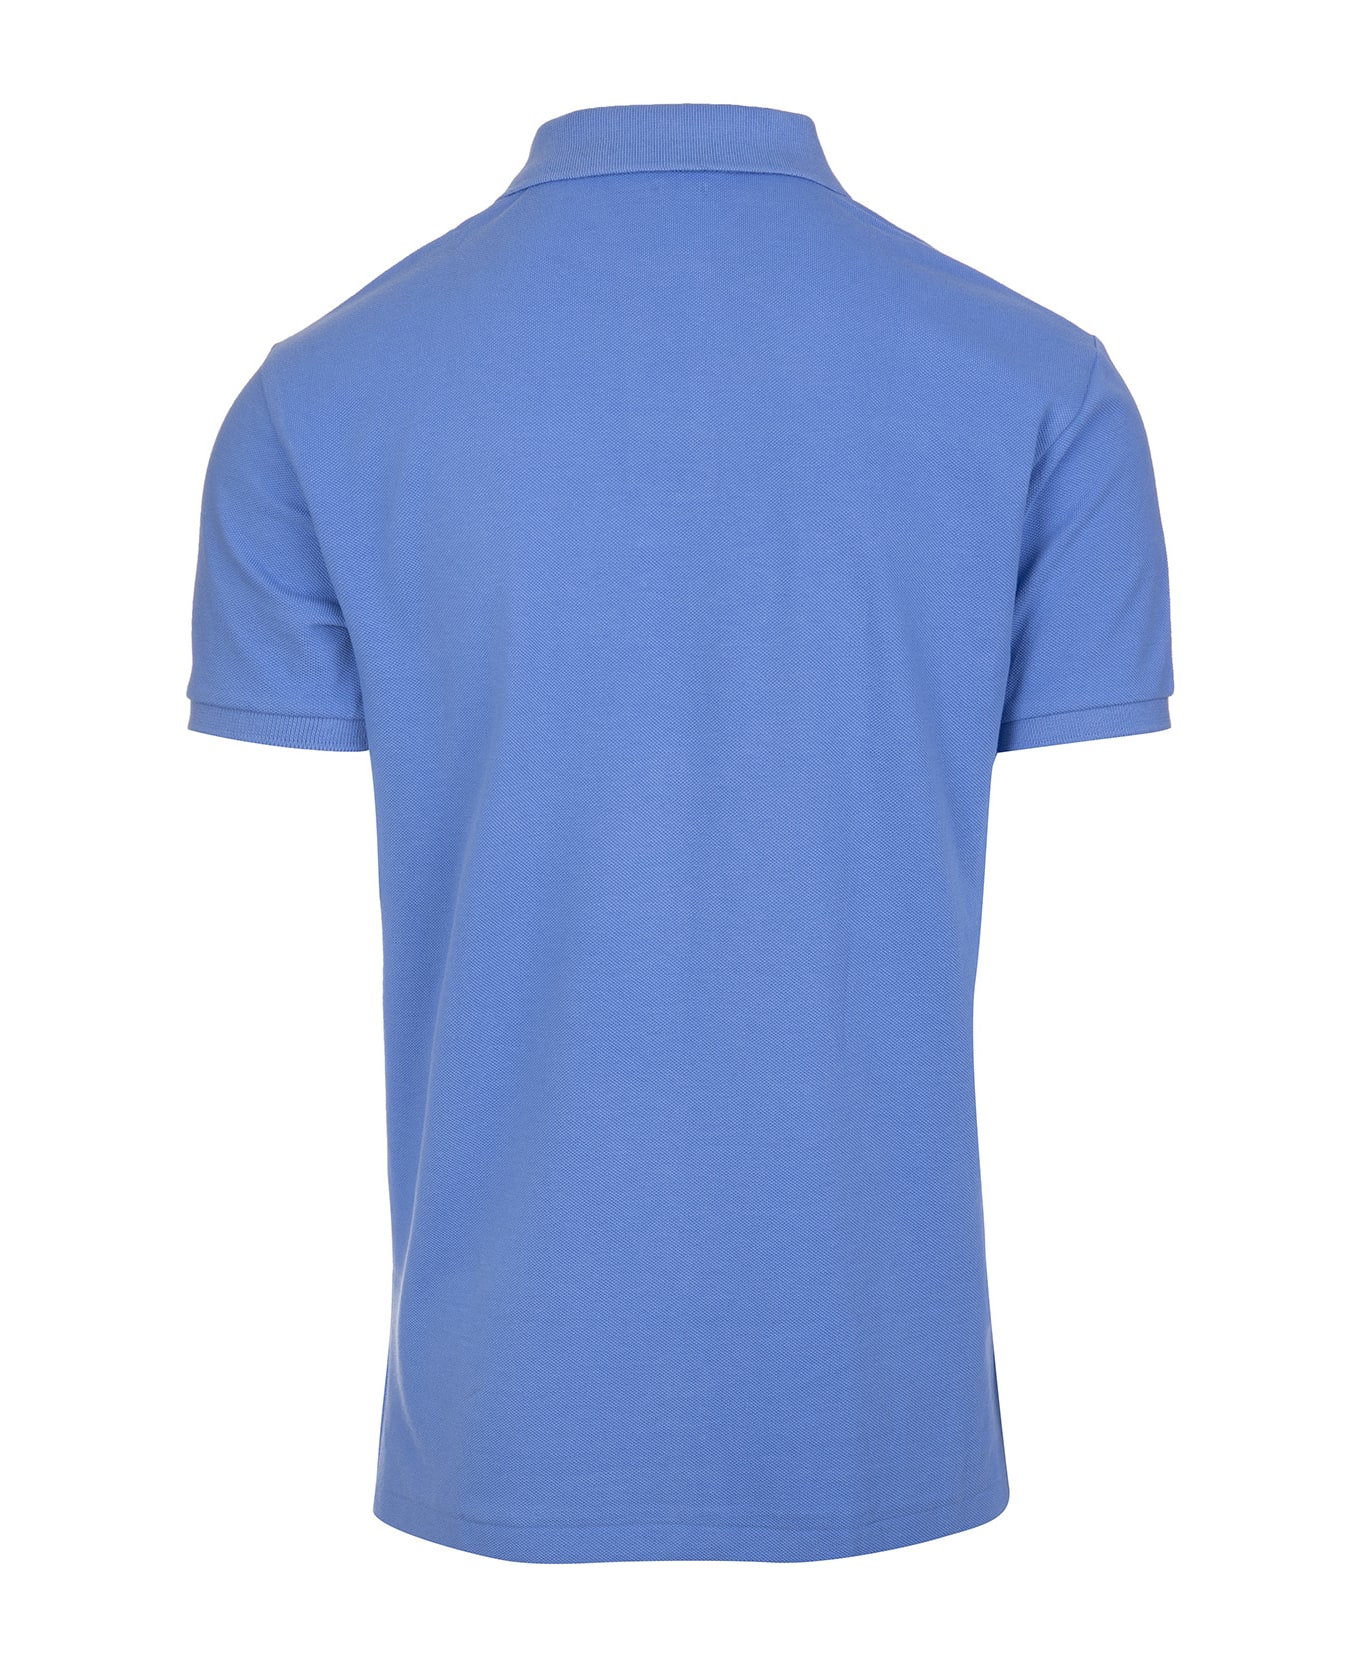 Ralph Lauren Light Blue And Blue Slim-fit Pique Polo Shirt - Blue